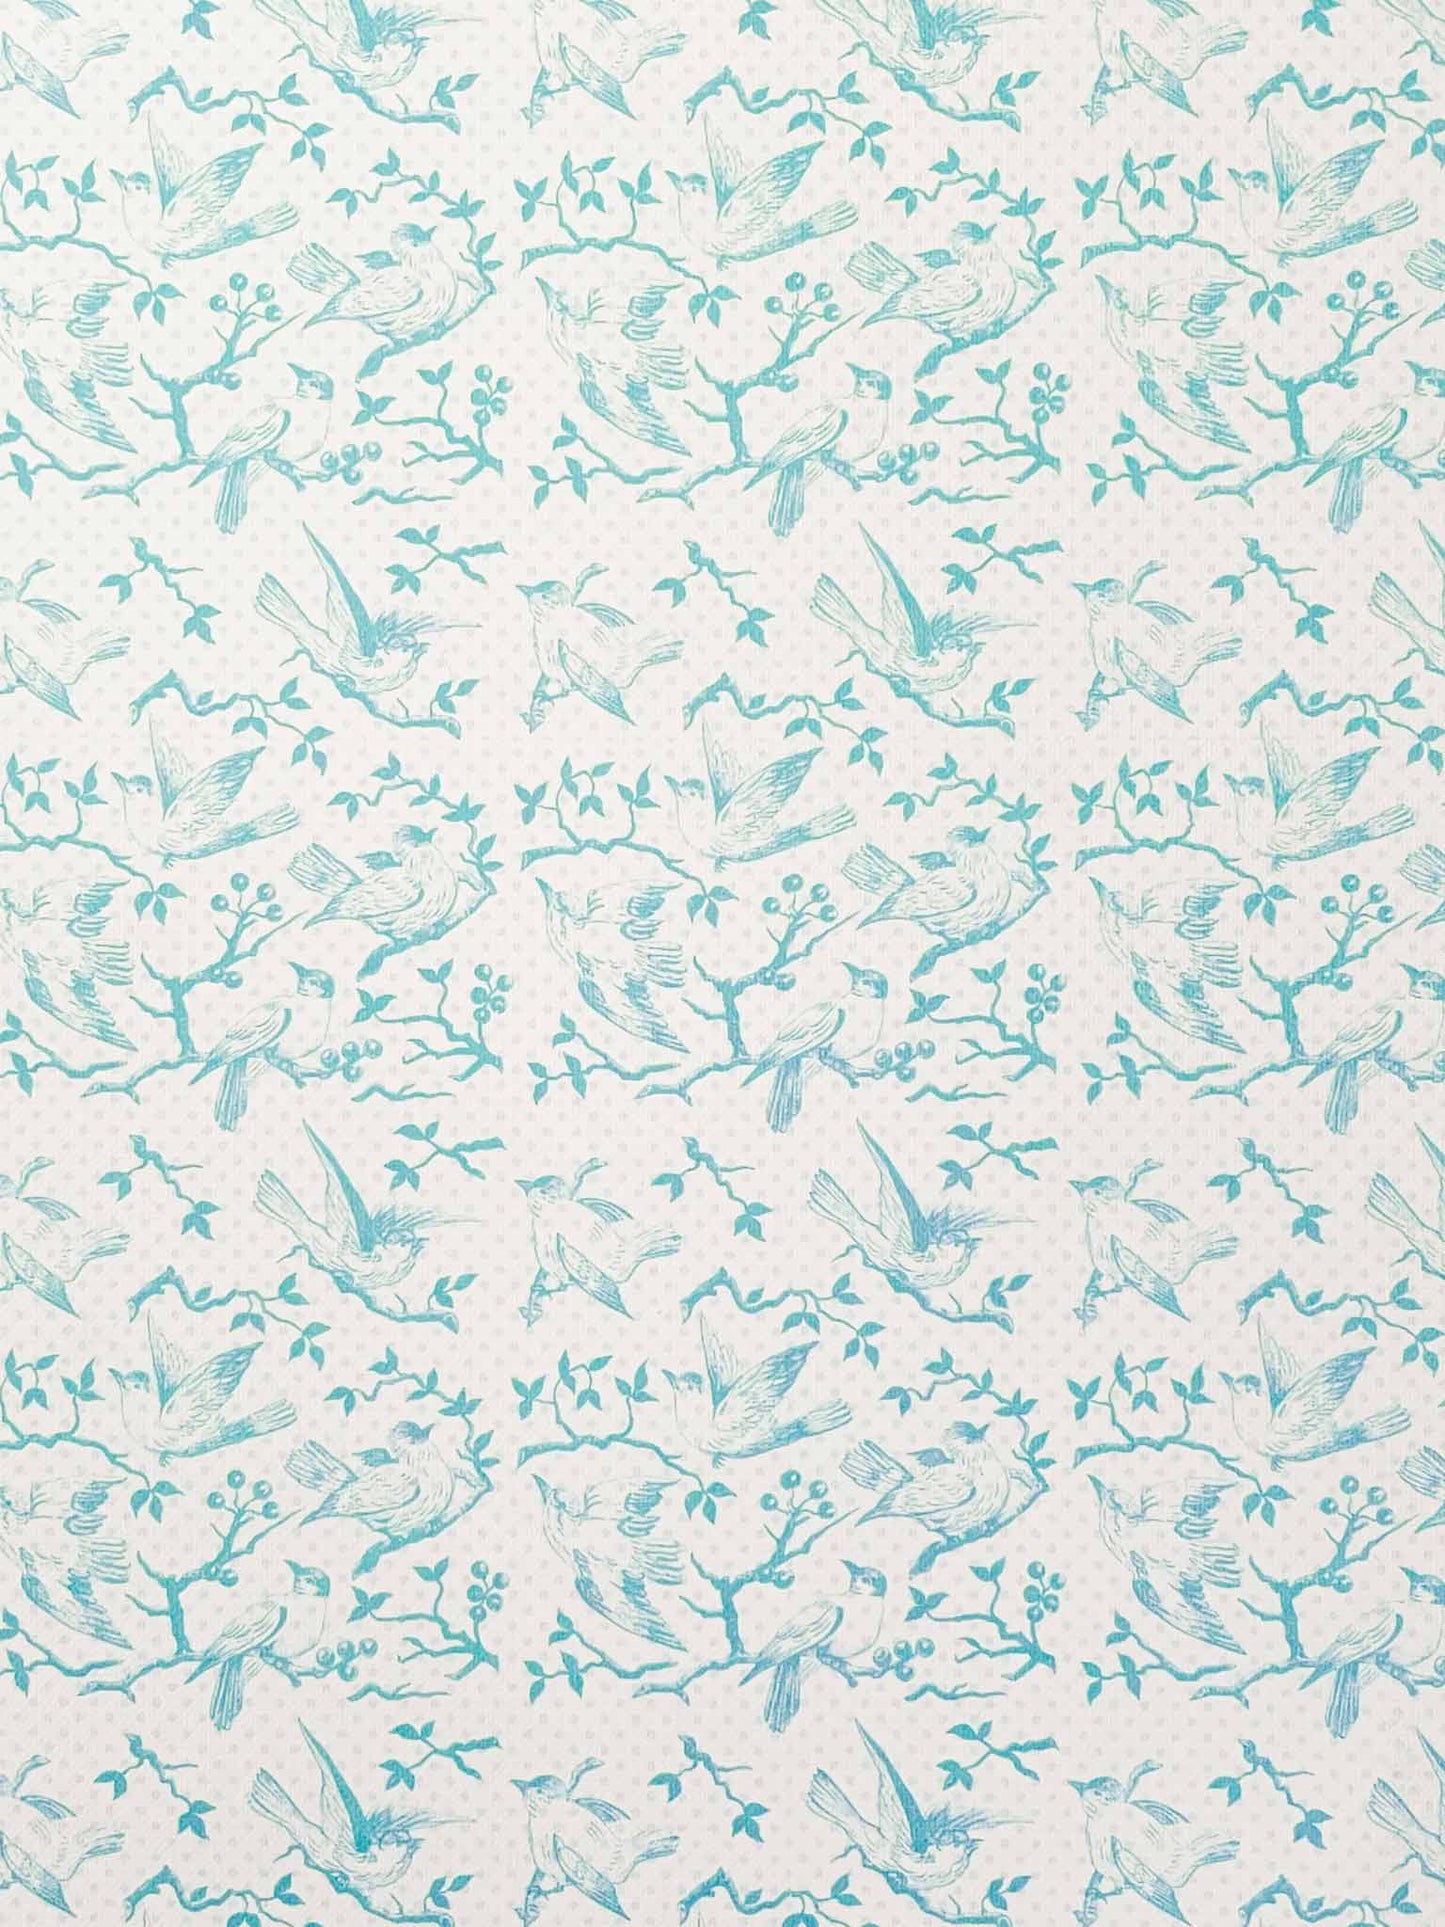 bird-garde-patterned-craft-paper